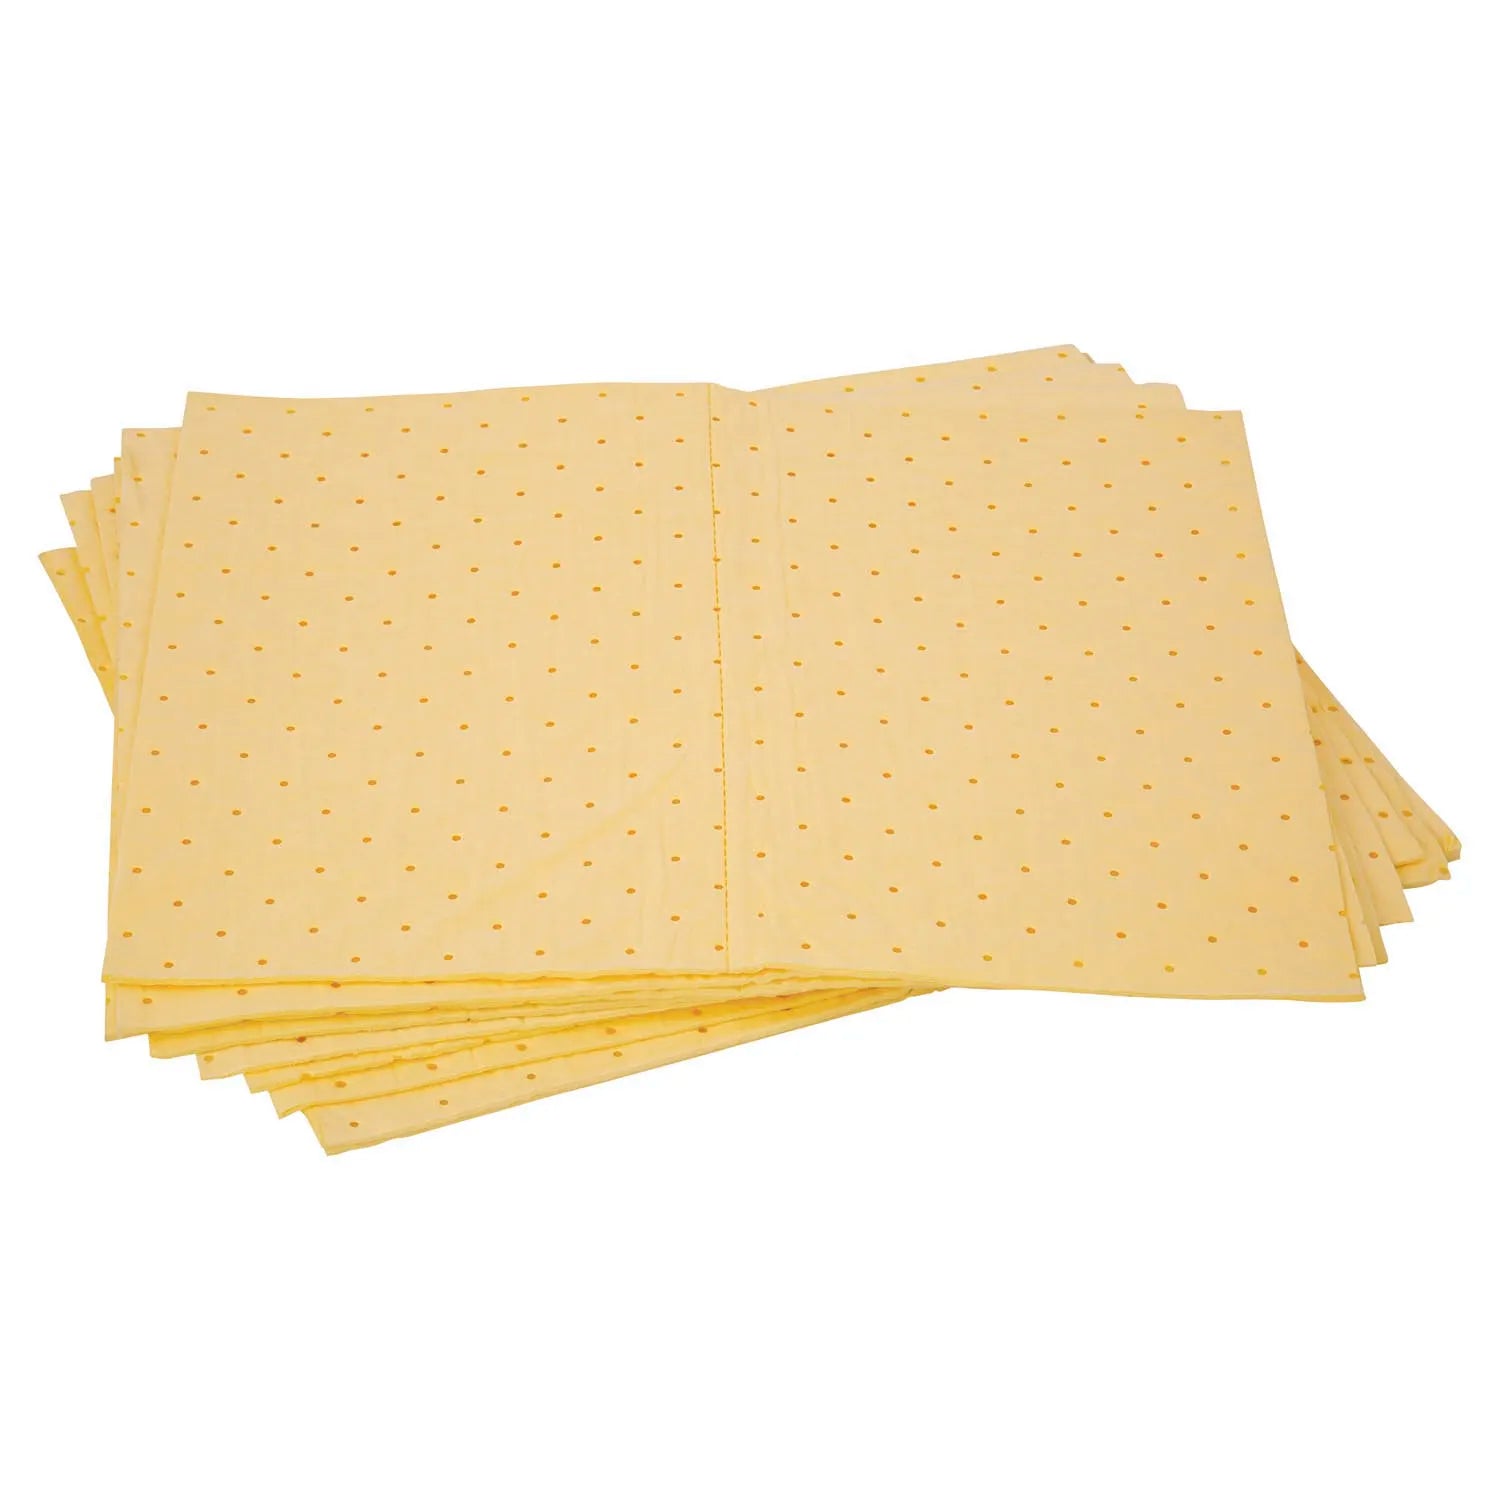 Pratt Yellow Hazchem Absorbent Pad - 300Gsm 10 pack